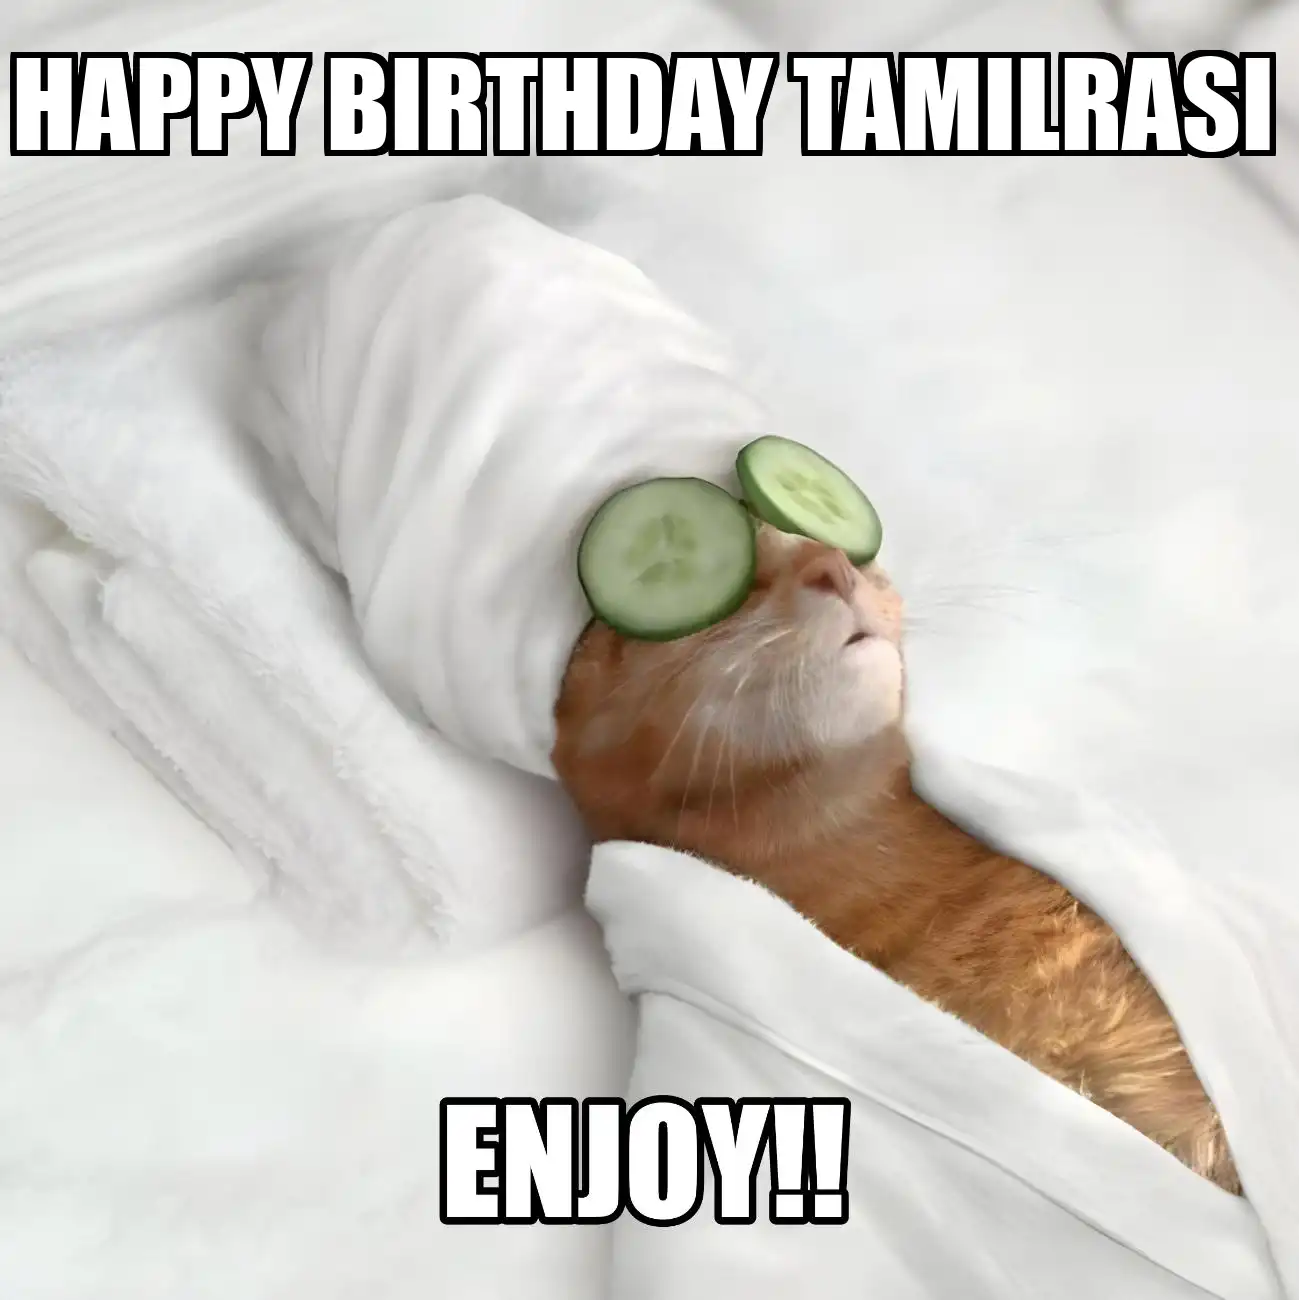 Happy Birthday Tamilrasi Enjoy Cat Meme